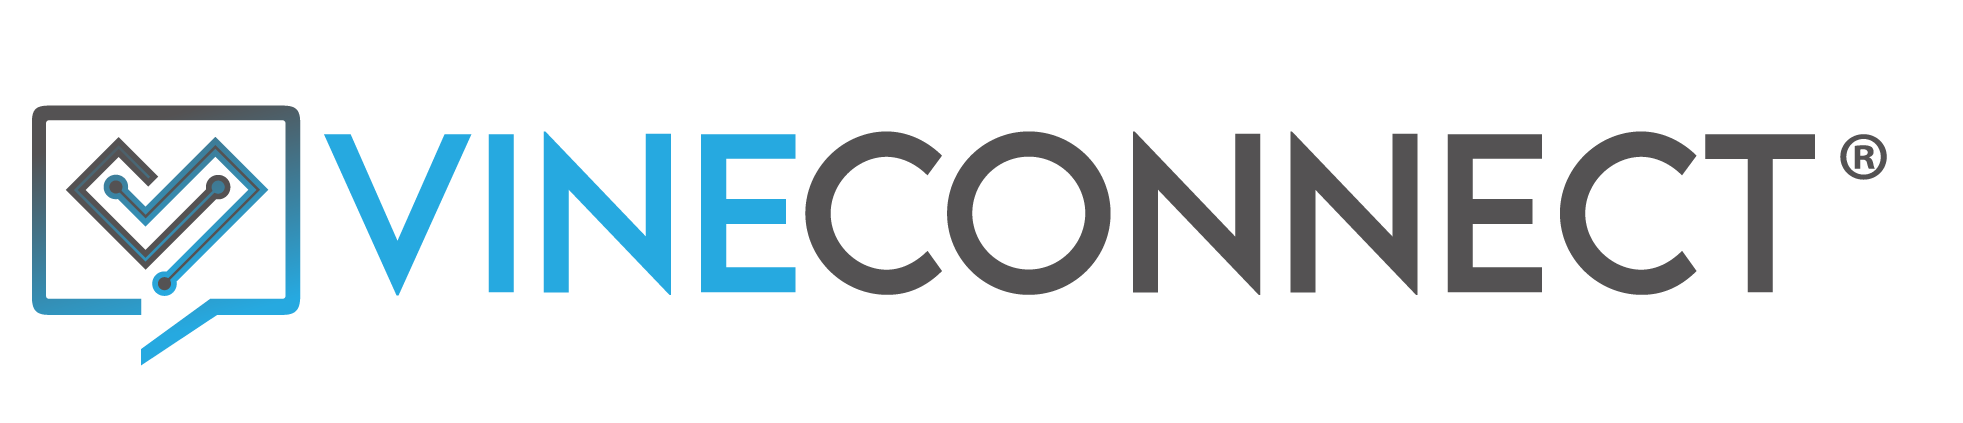 VineConnect® Official Logo - Full Color